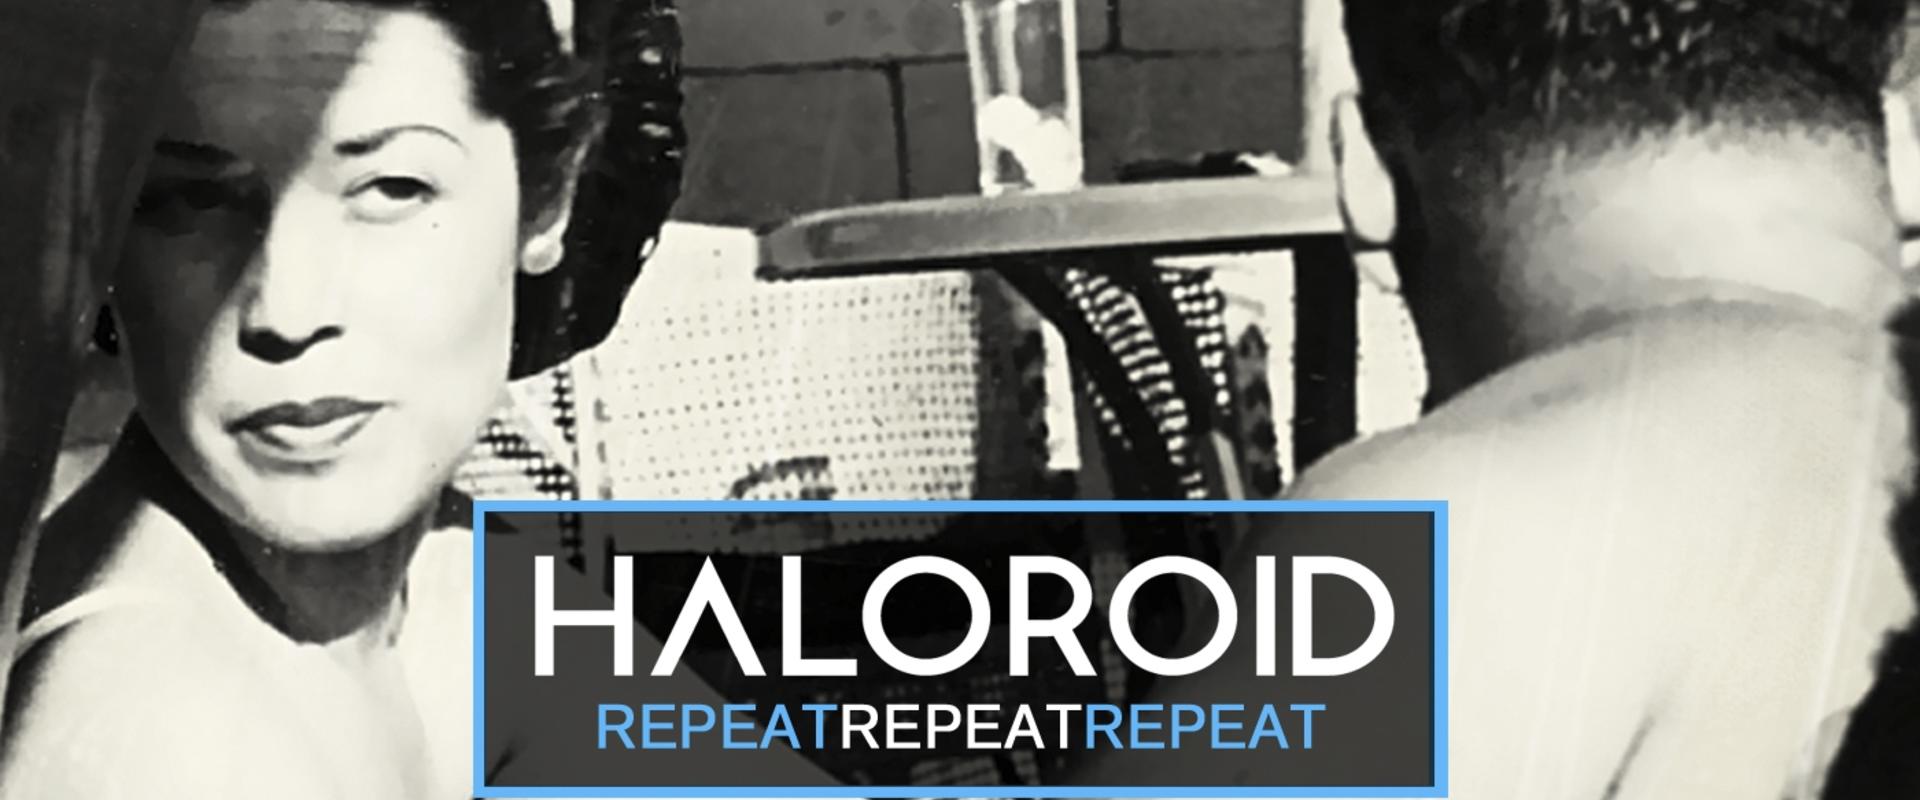 Haloroid - RepeatRepeatRepeat